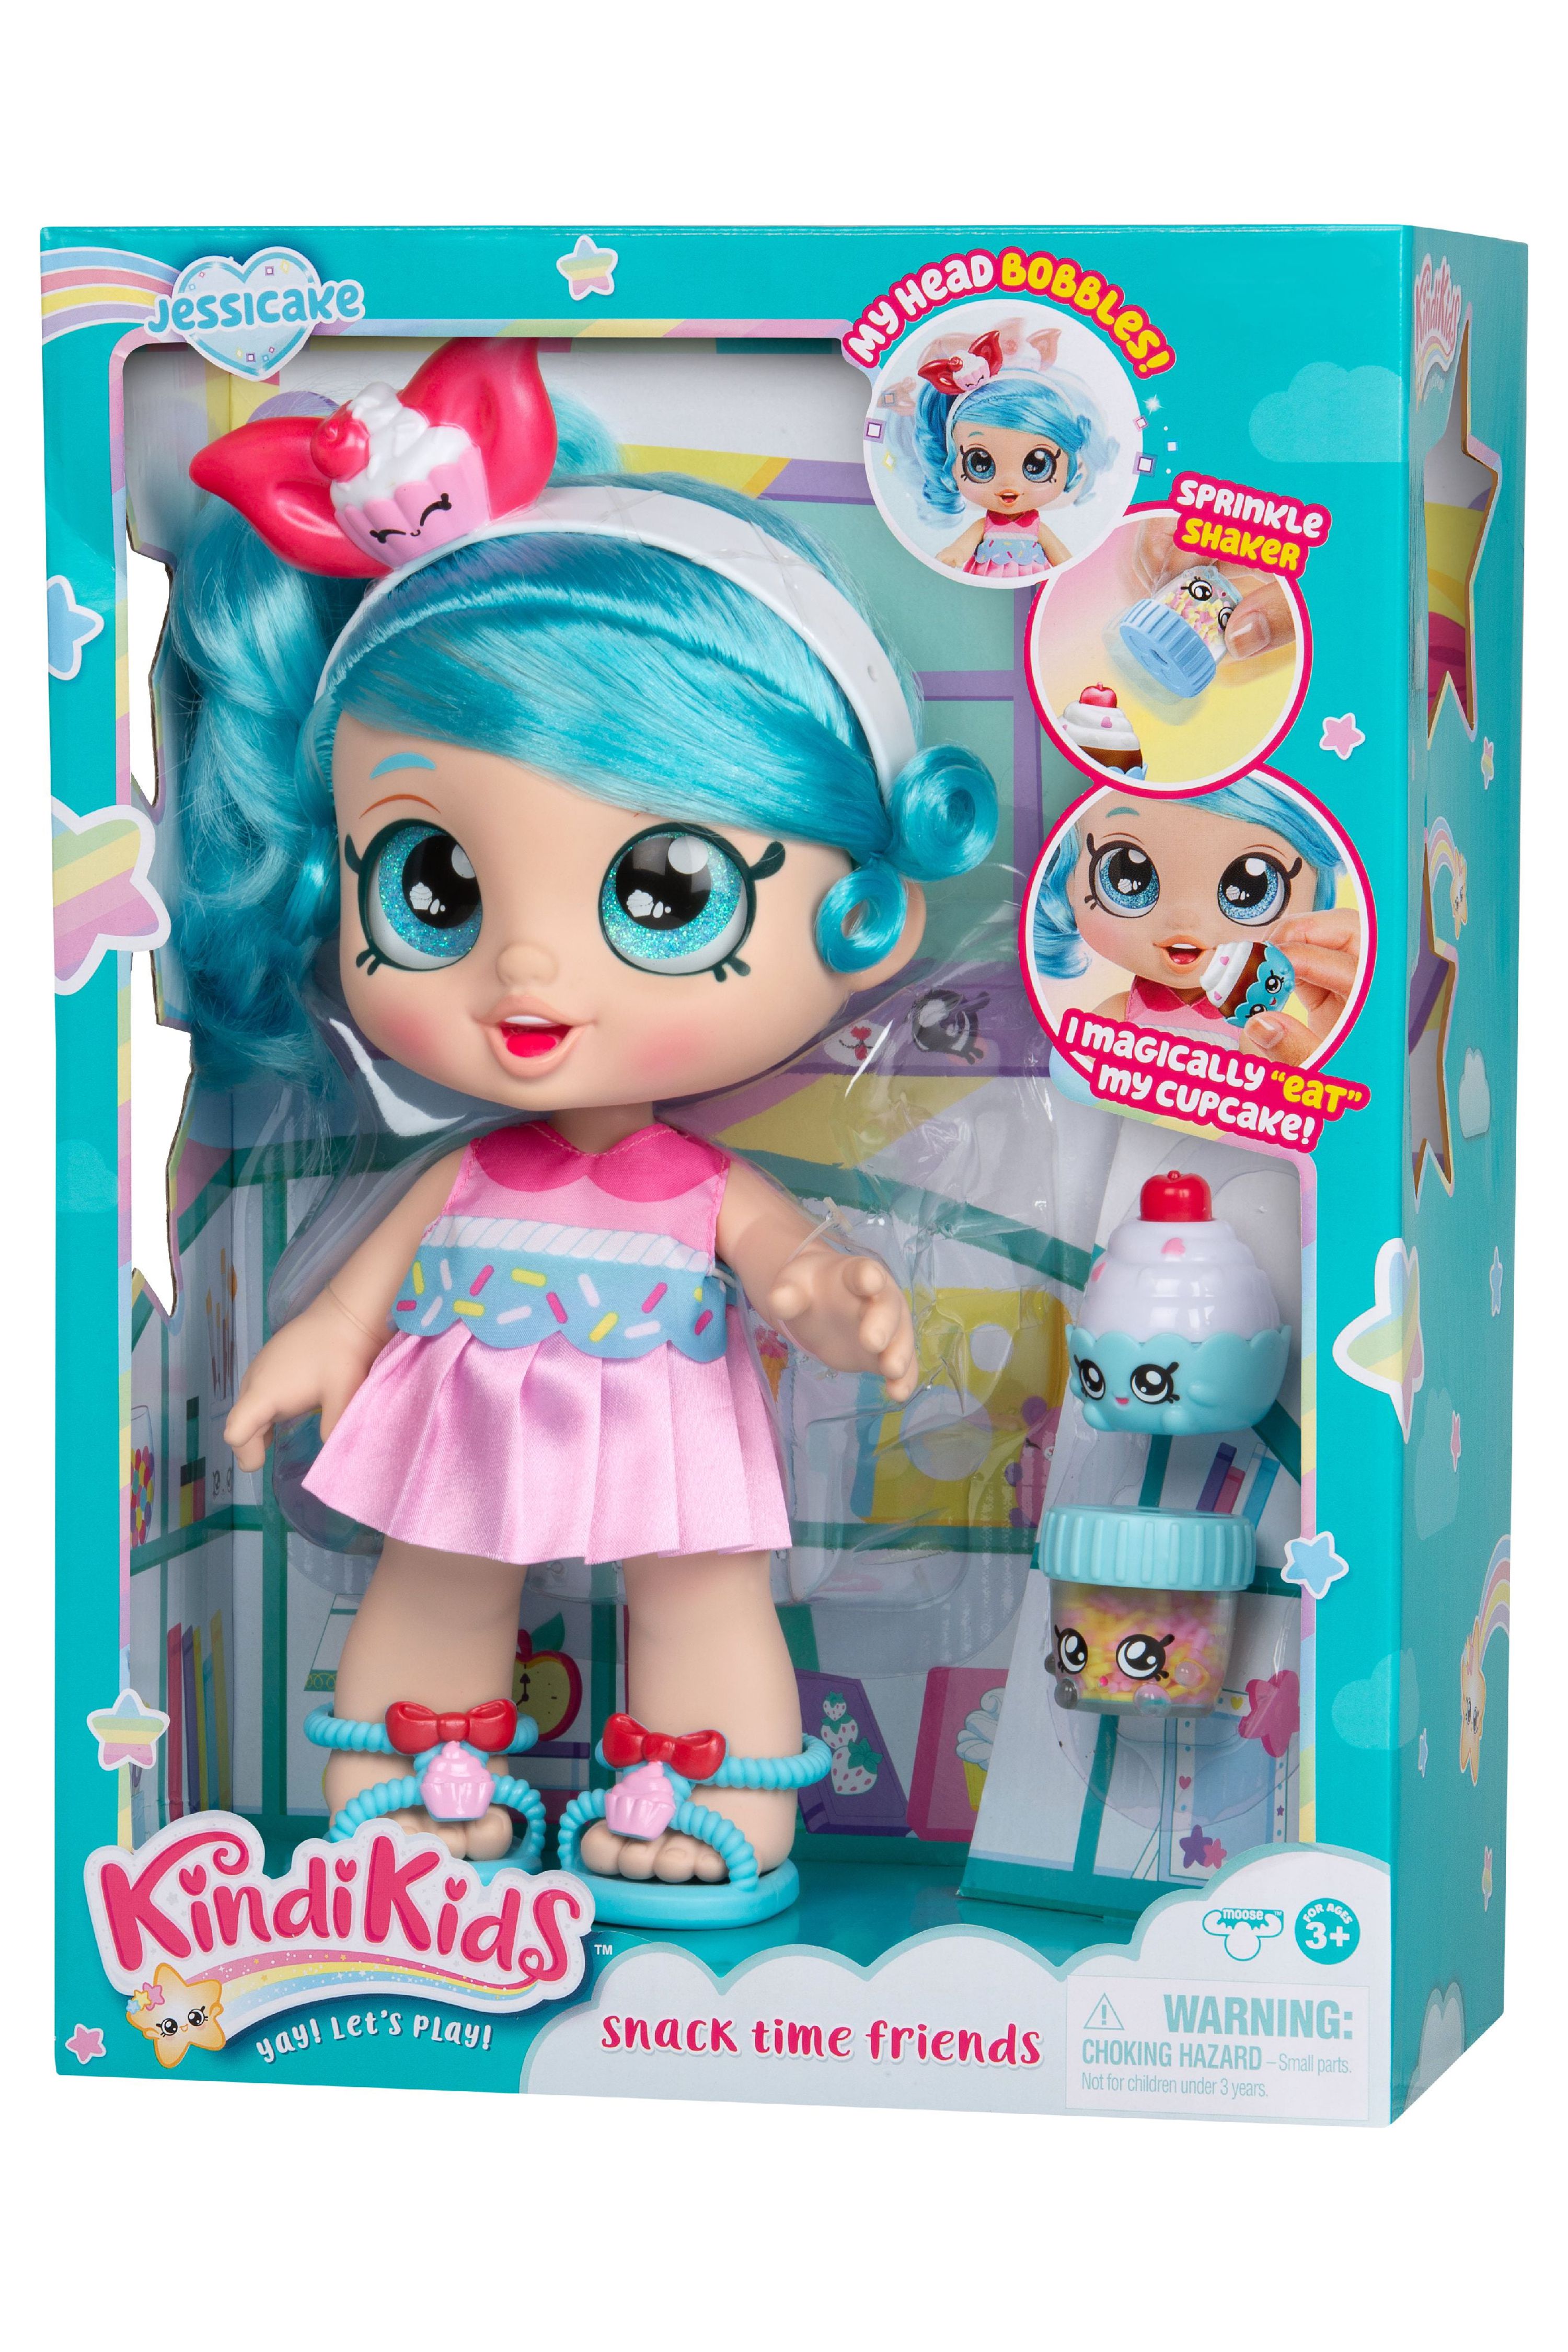 Kindi Kids 50008 Snack Time Friends, Pre-School 10 inch Doll - image 4 of 6